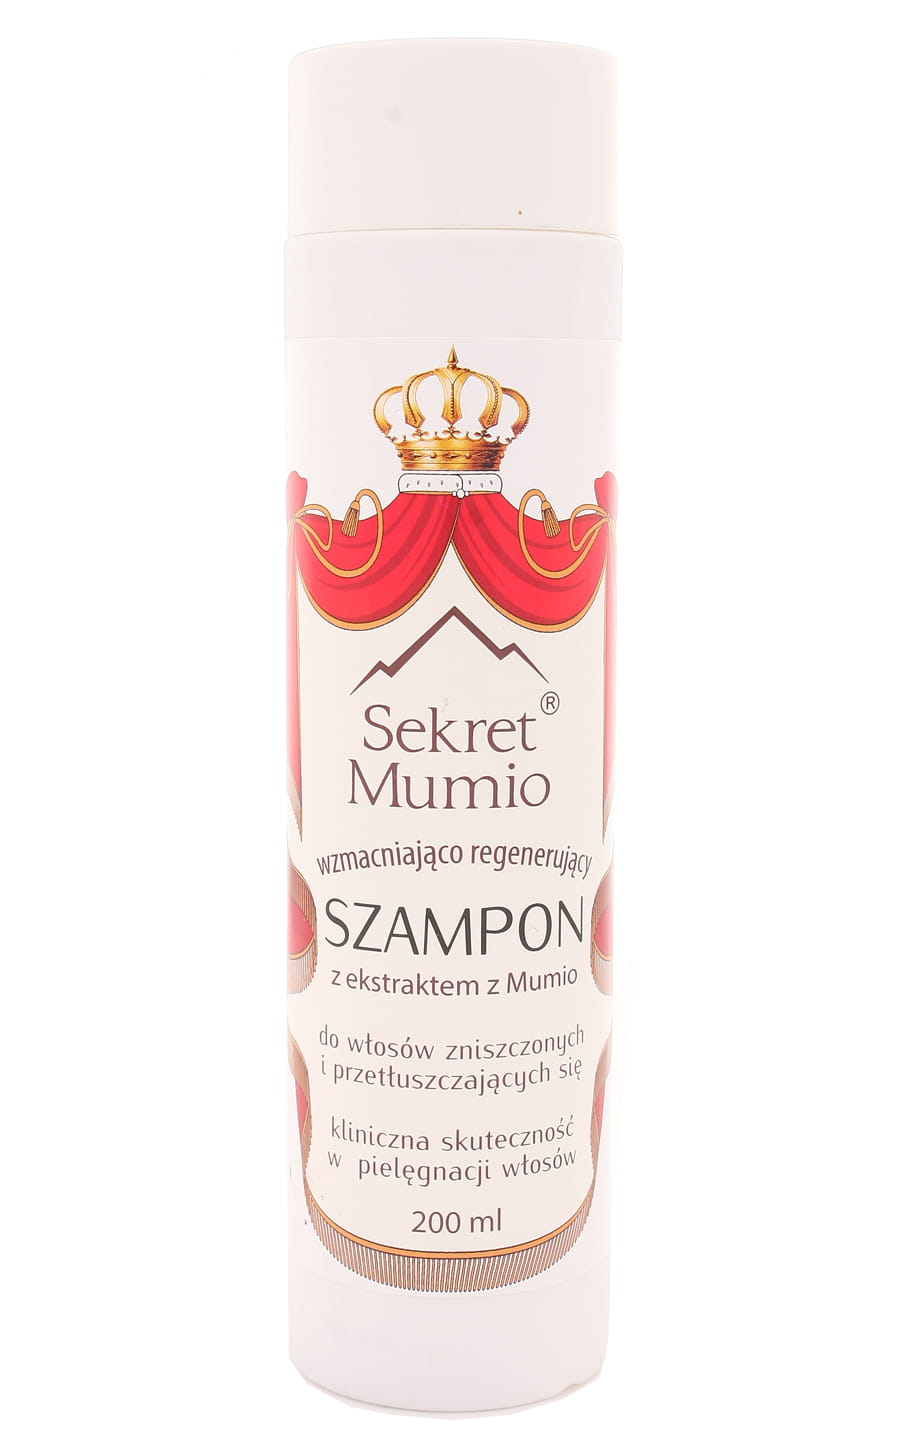 sekret mumio szampon